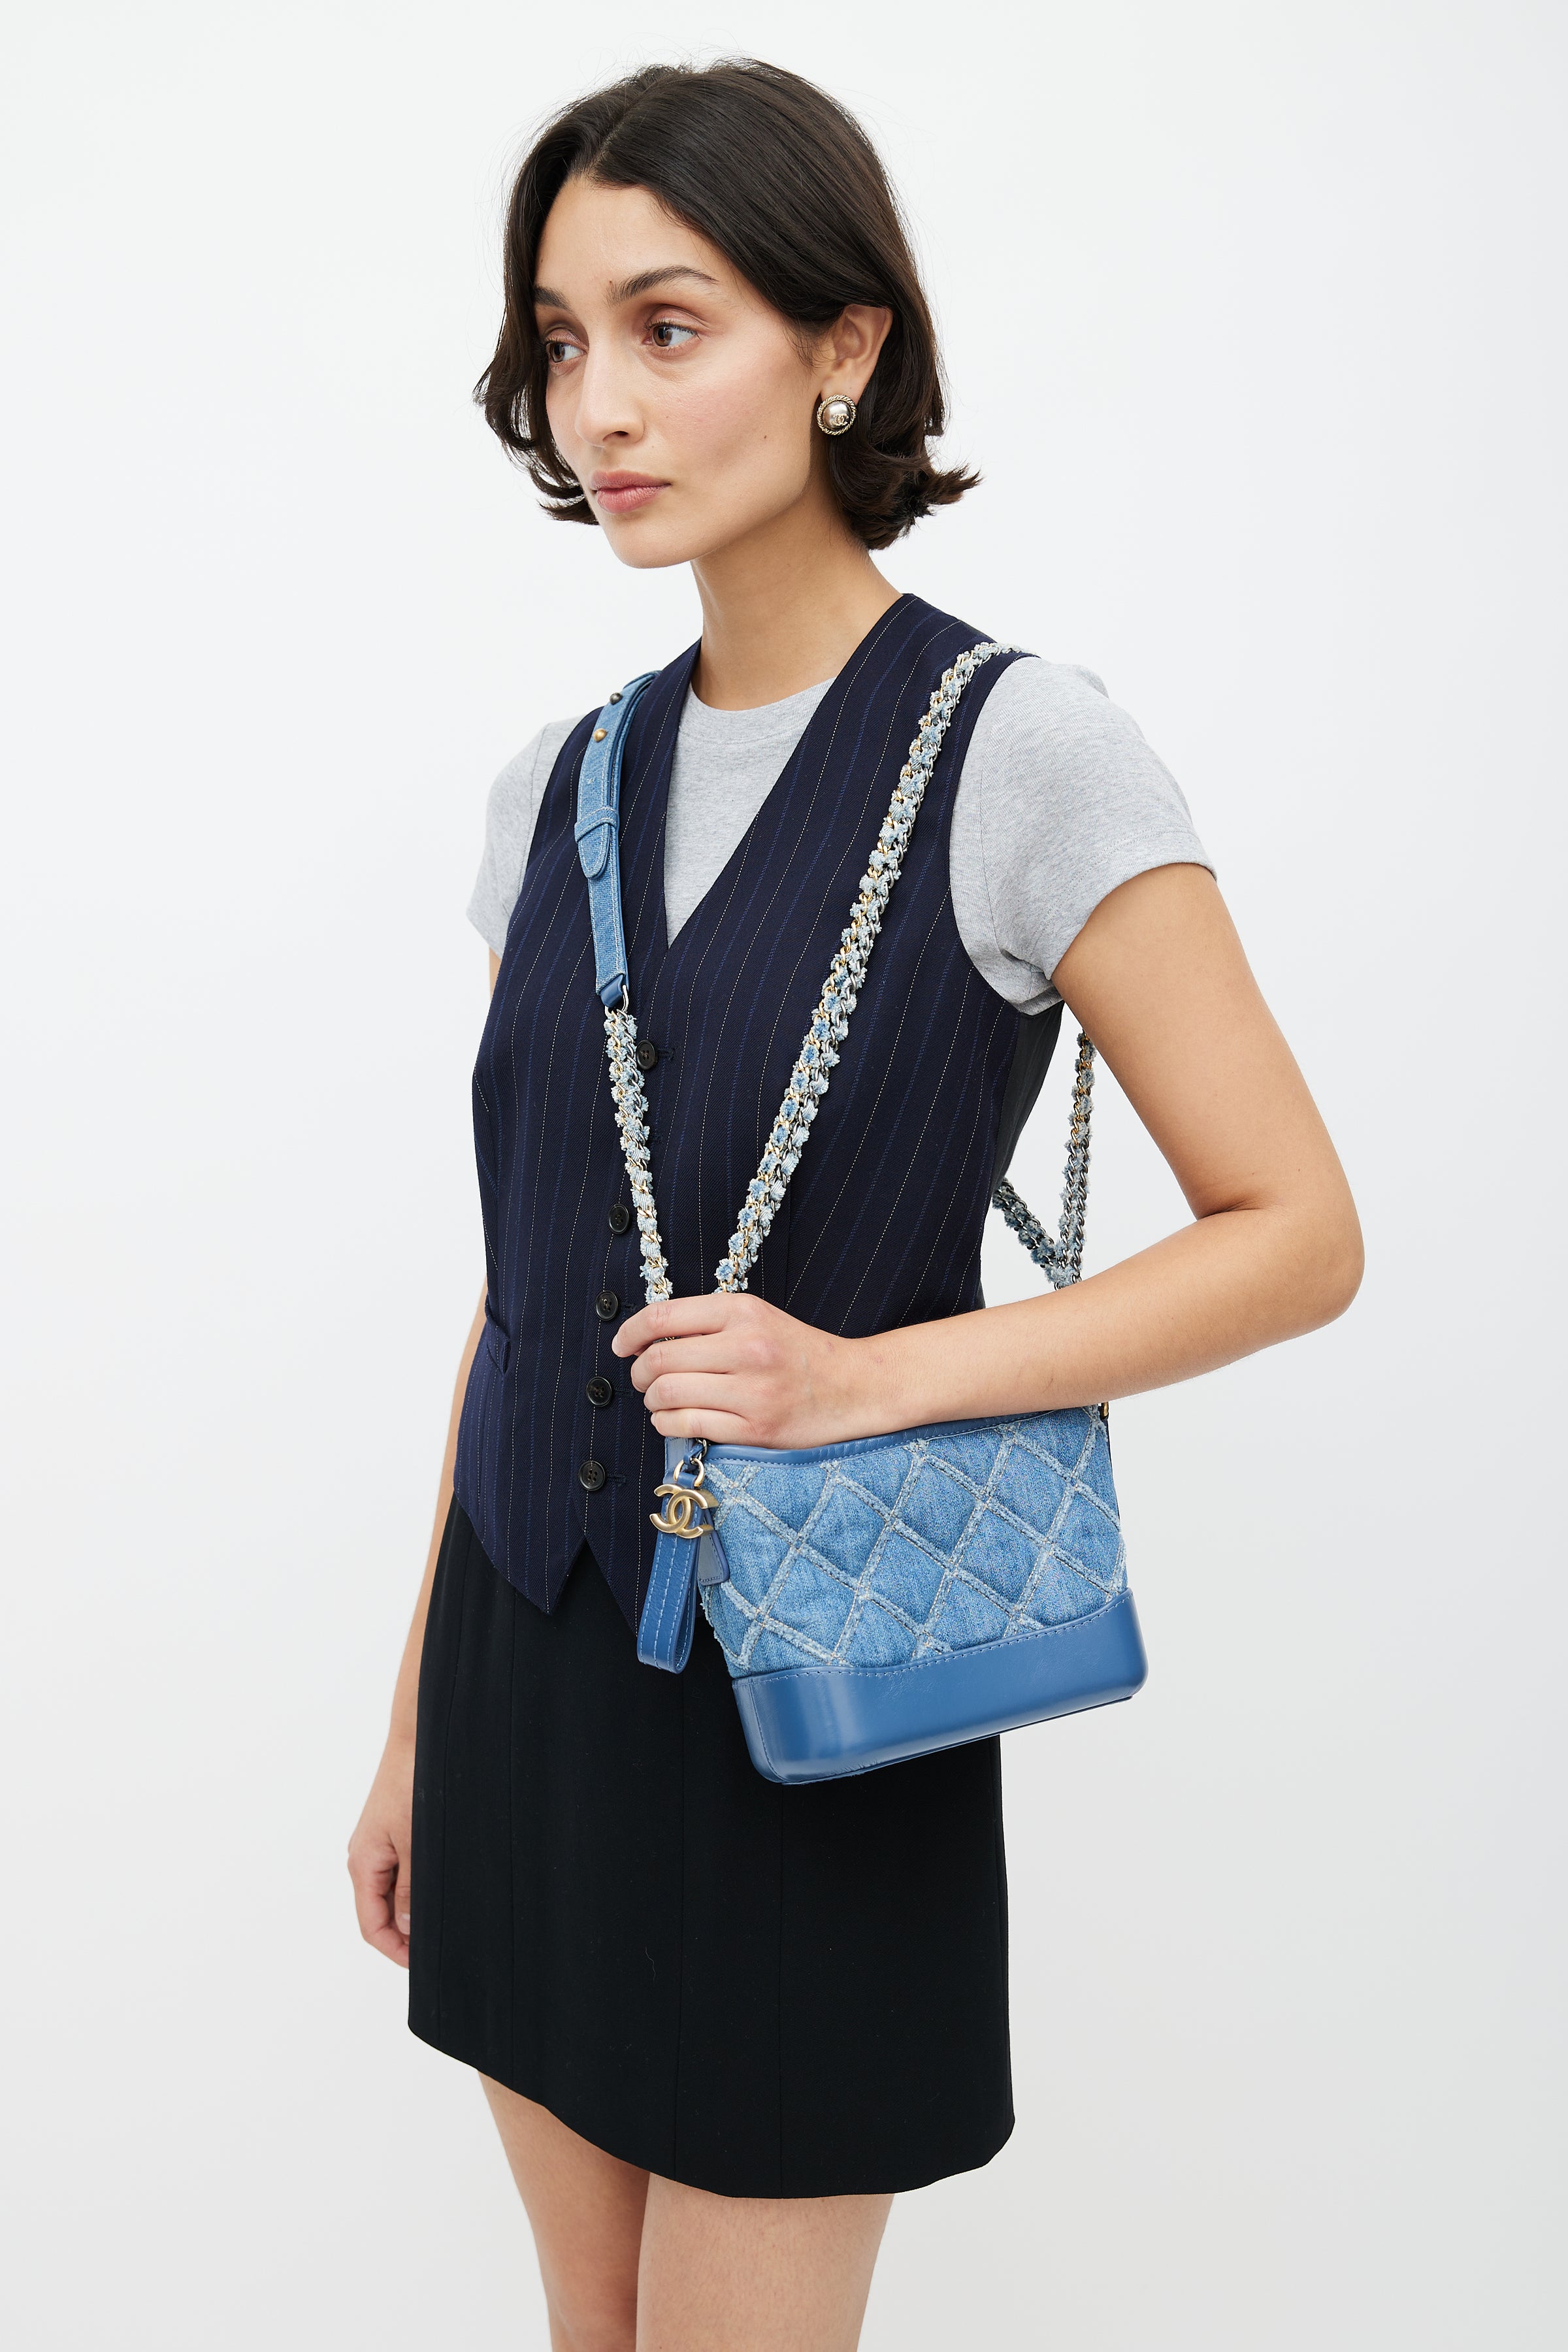 Discover CHANEL: CHANEL Handbag Factory, Style Blog